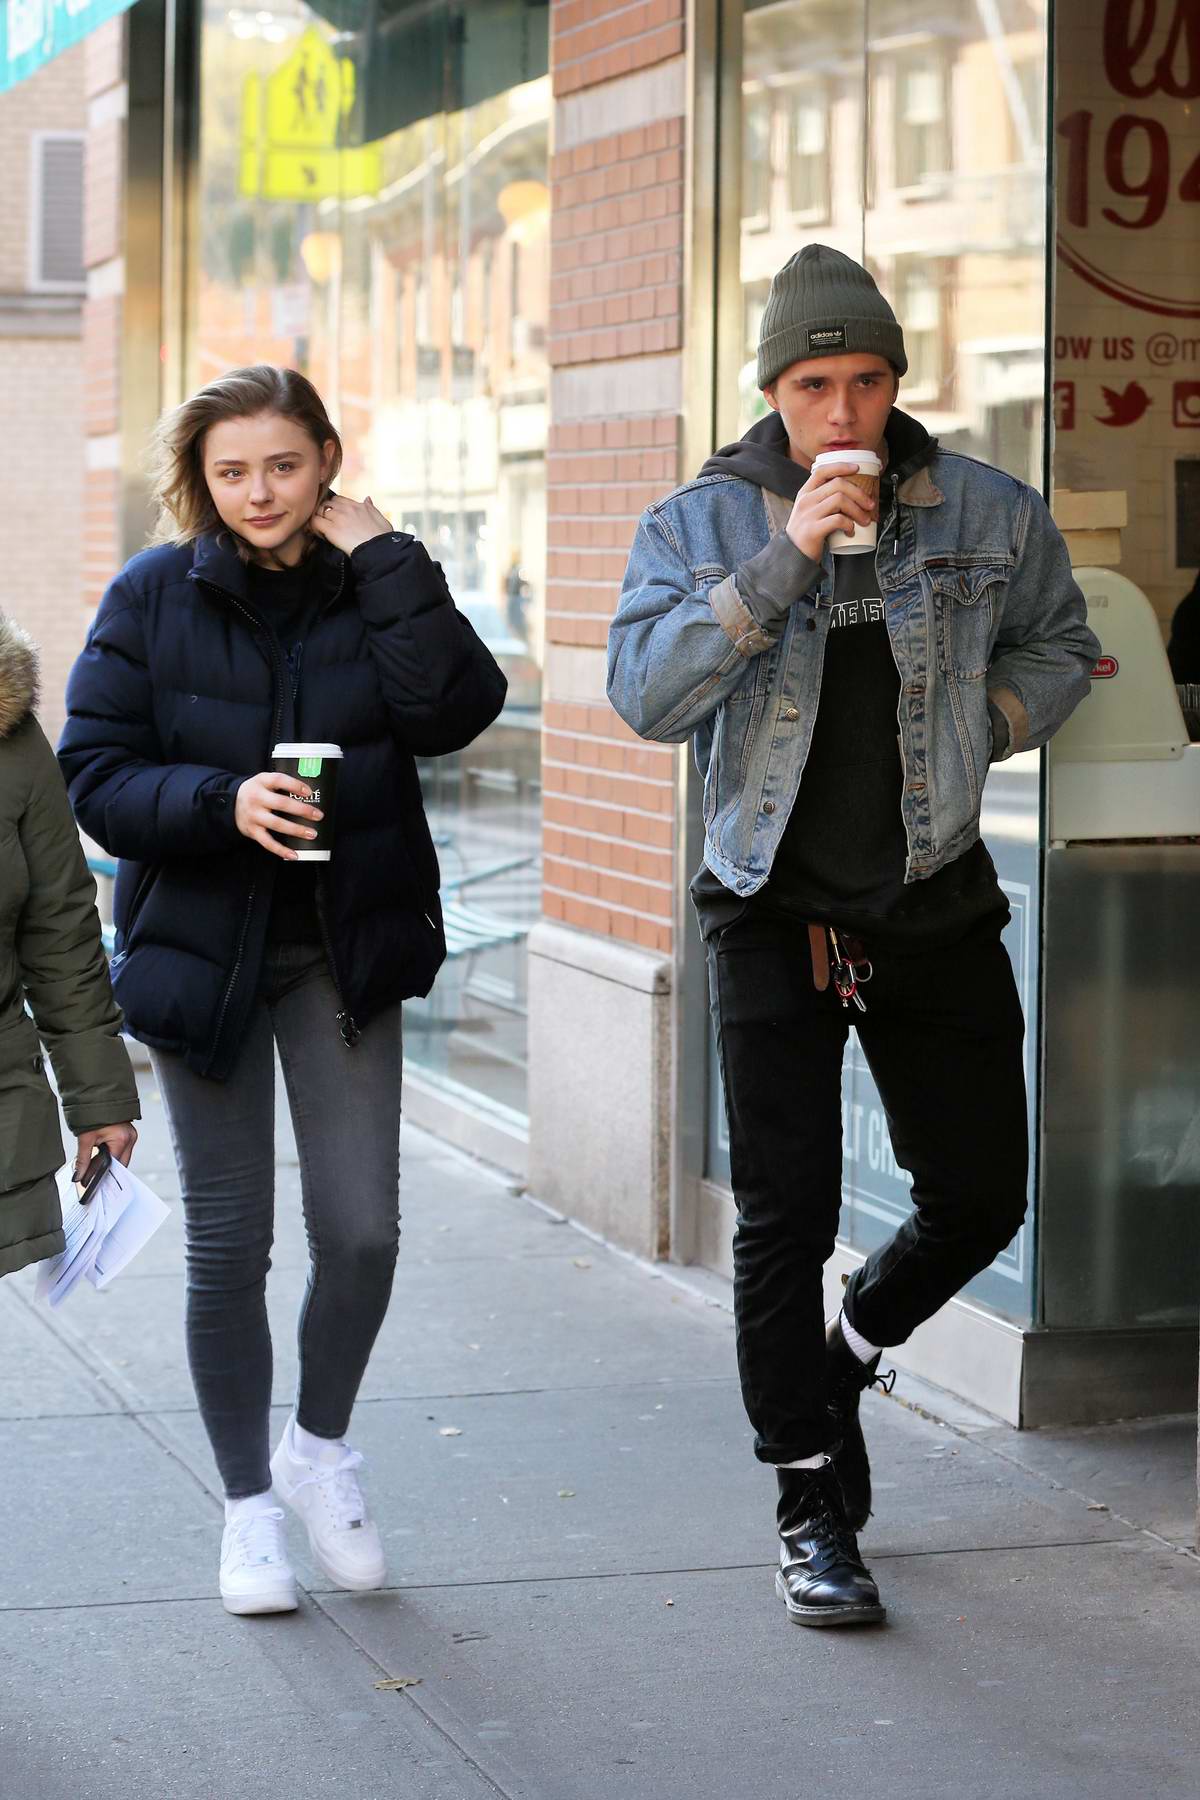 Chloe Grace Moretz & Brooklyn Beckham Arrive To Zinque Cafe Before Going On  A Jog 6.30.16 